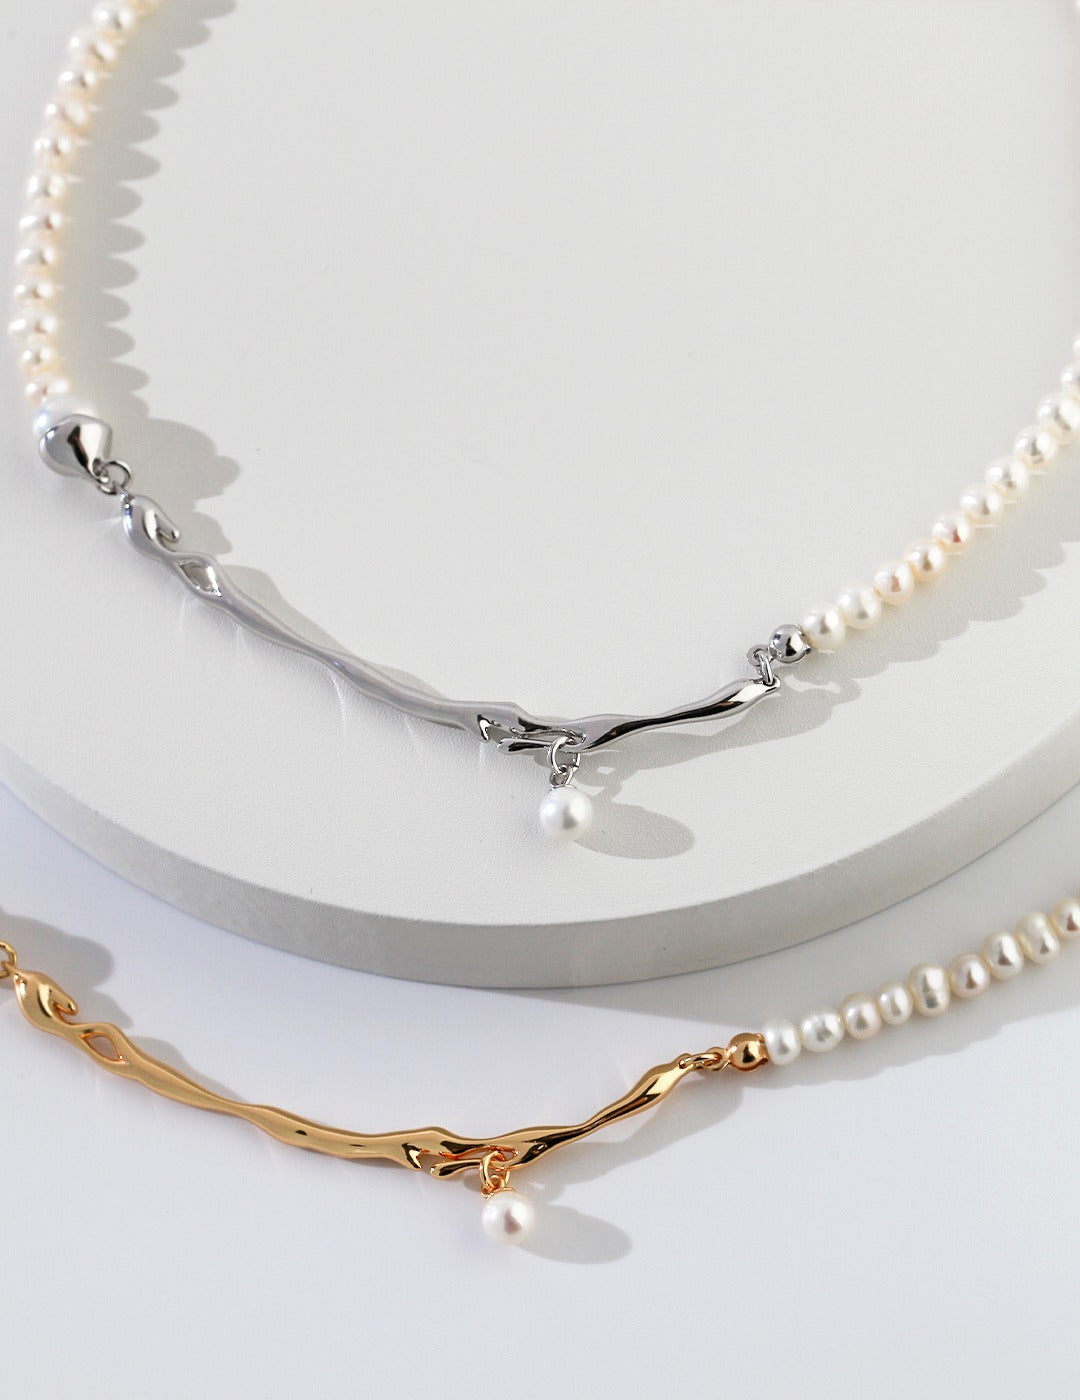 Elegant Pearl Necklace Featuring Artistic Fluid Metallic Bars